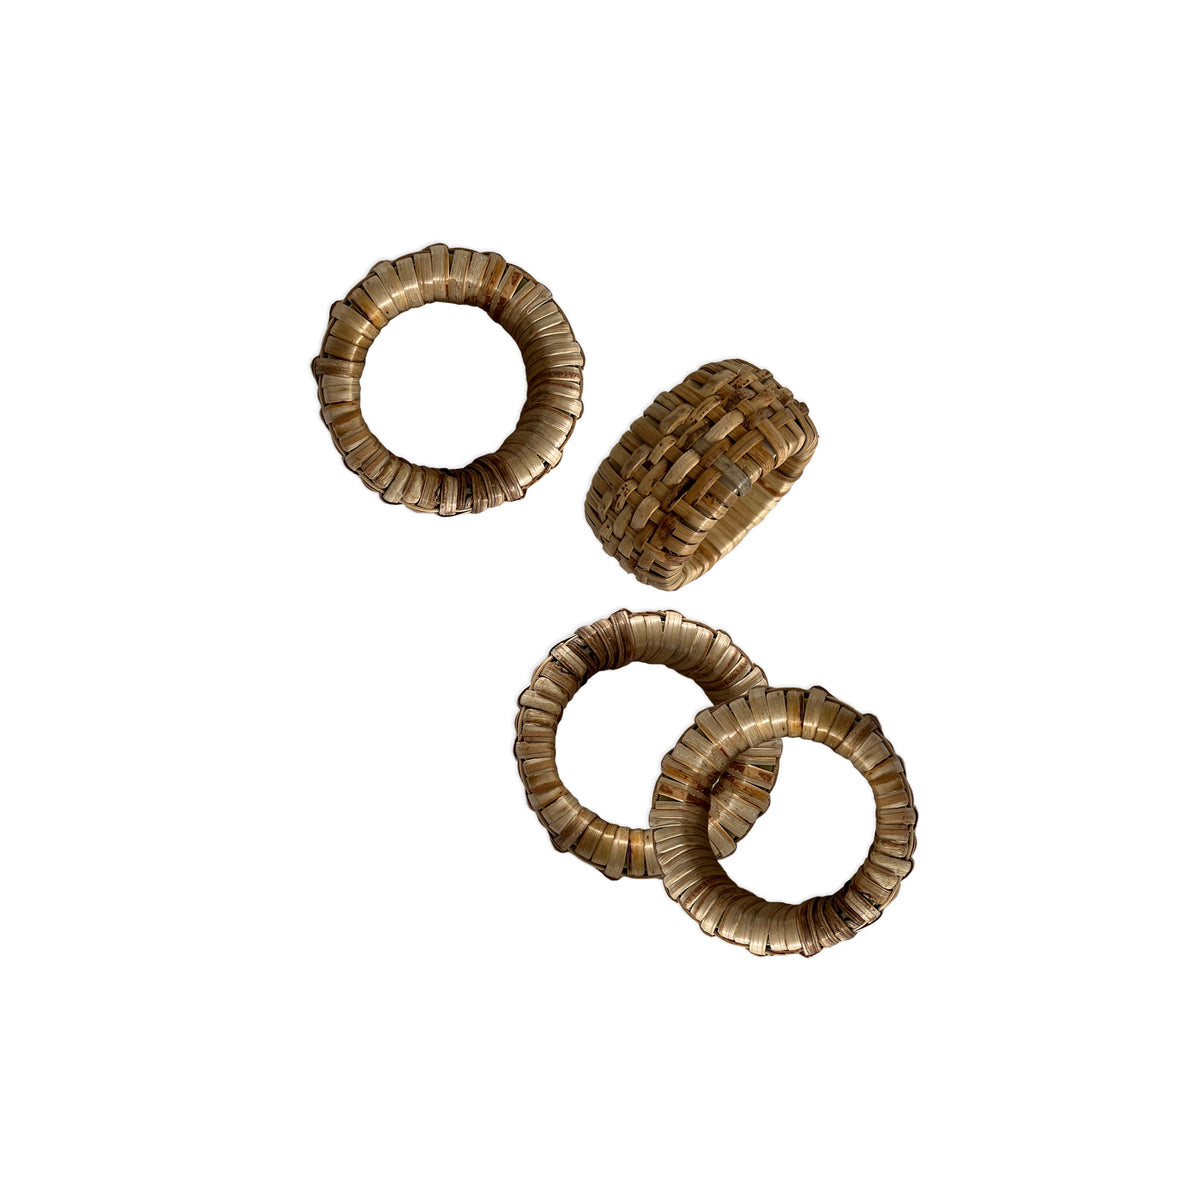 Woven Rattan Napkin Rings Set of 4 from Caskata